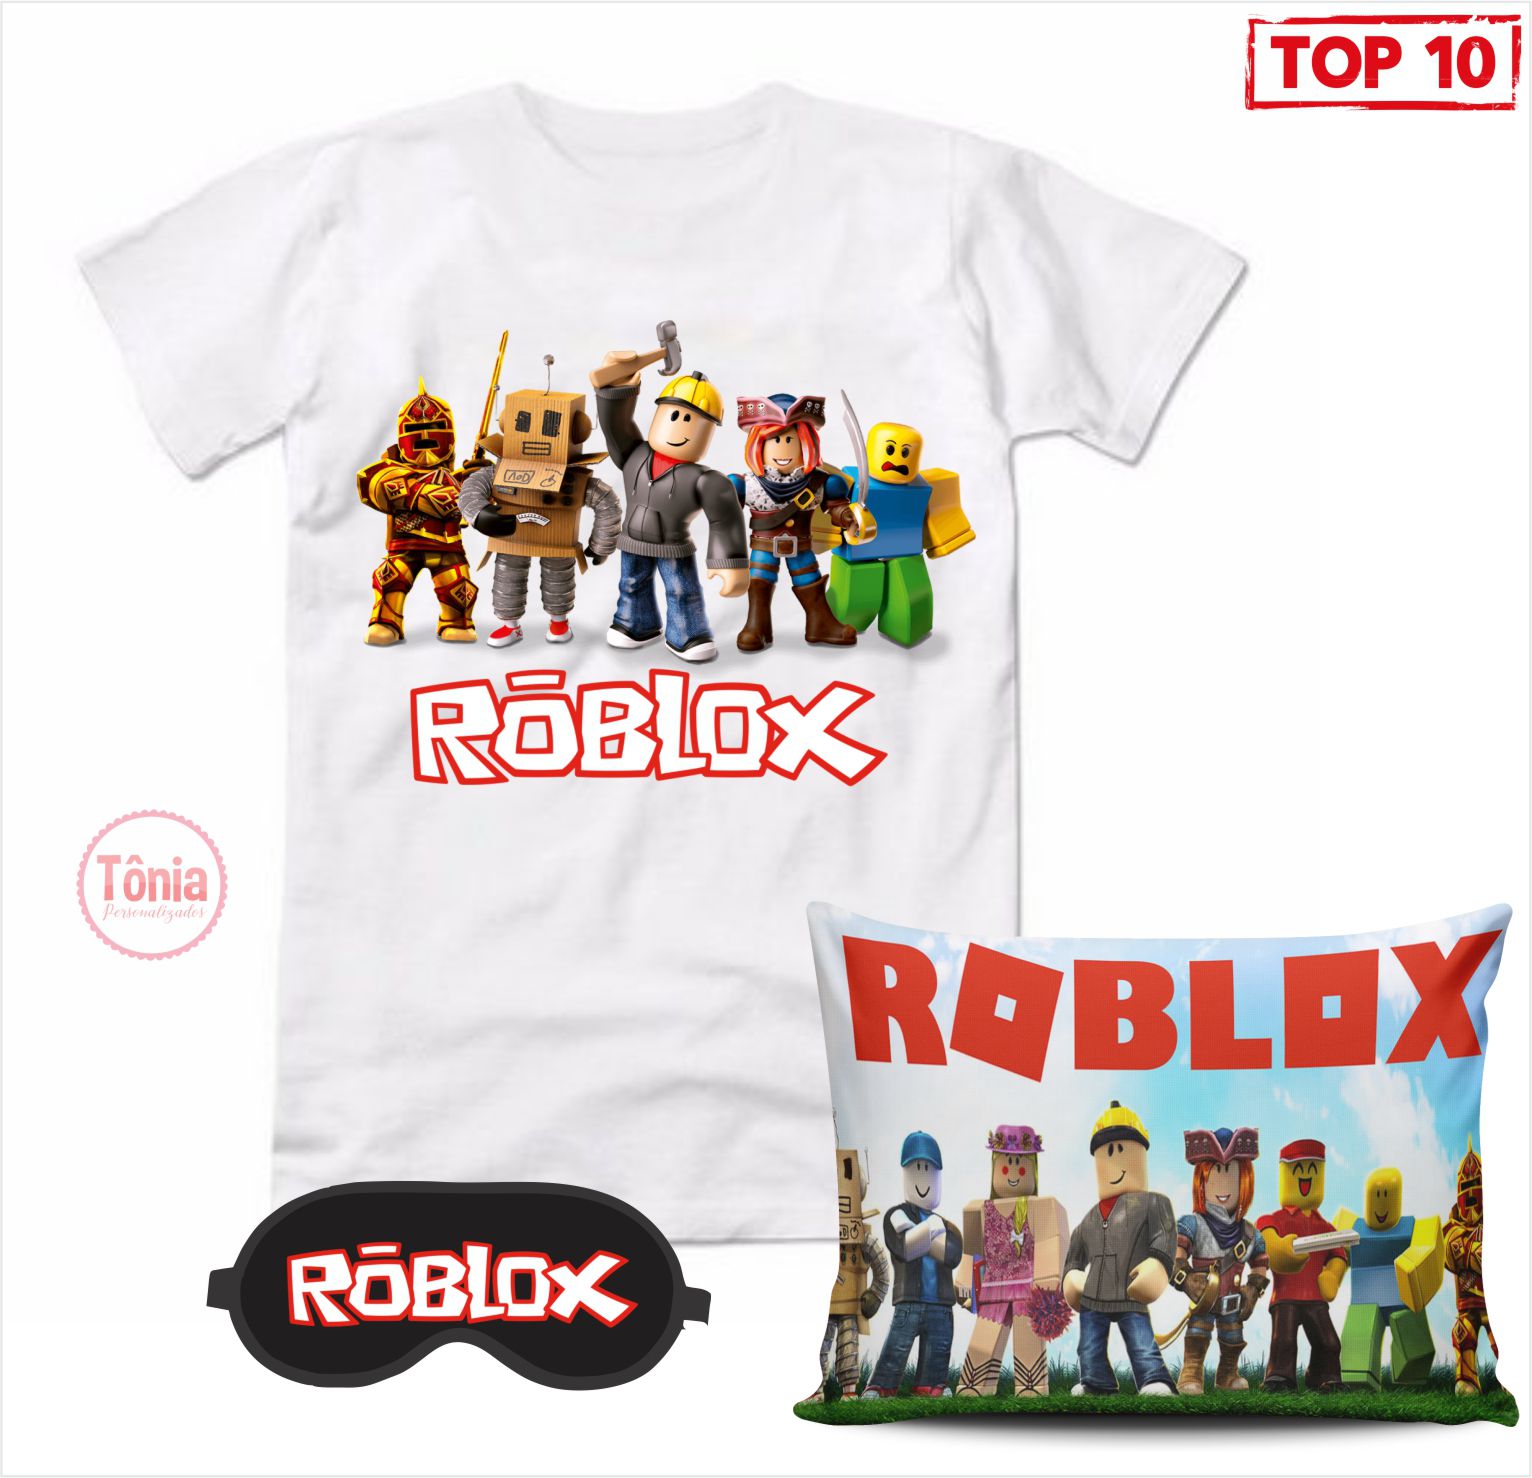 Camiseta Roblox Modelo 16